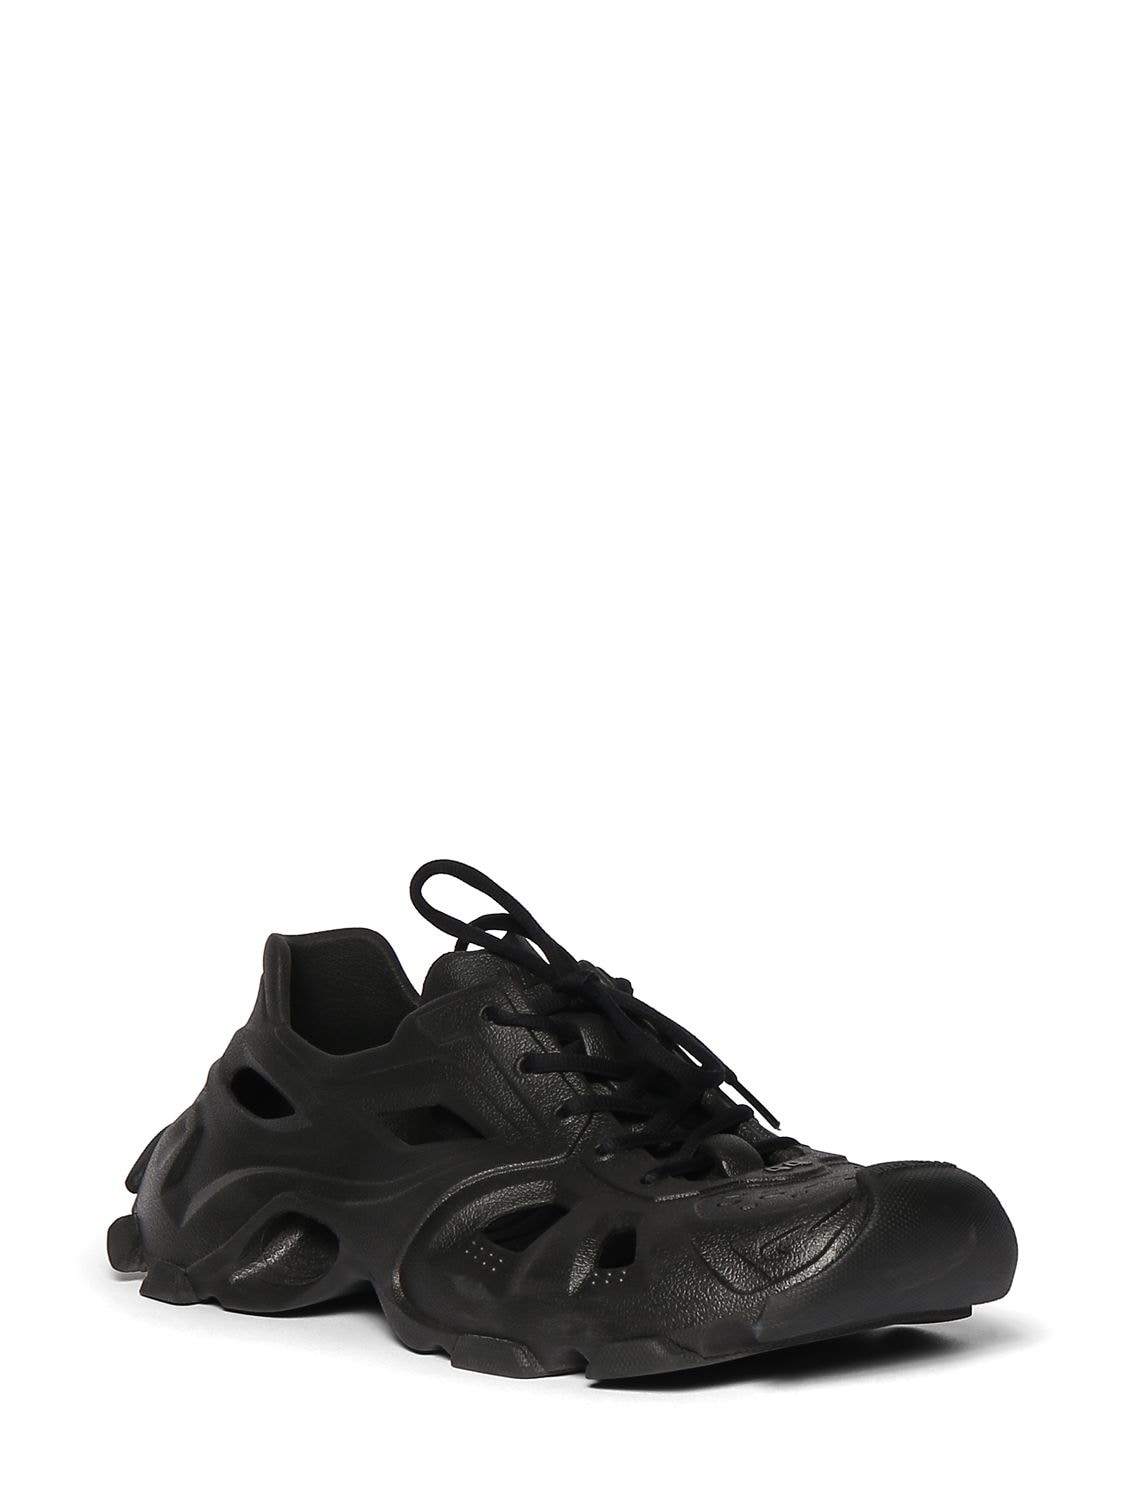 Balenciaga Men's Hd Molded Eva Low-top Sneakers In Black | ModeSens